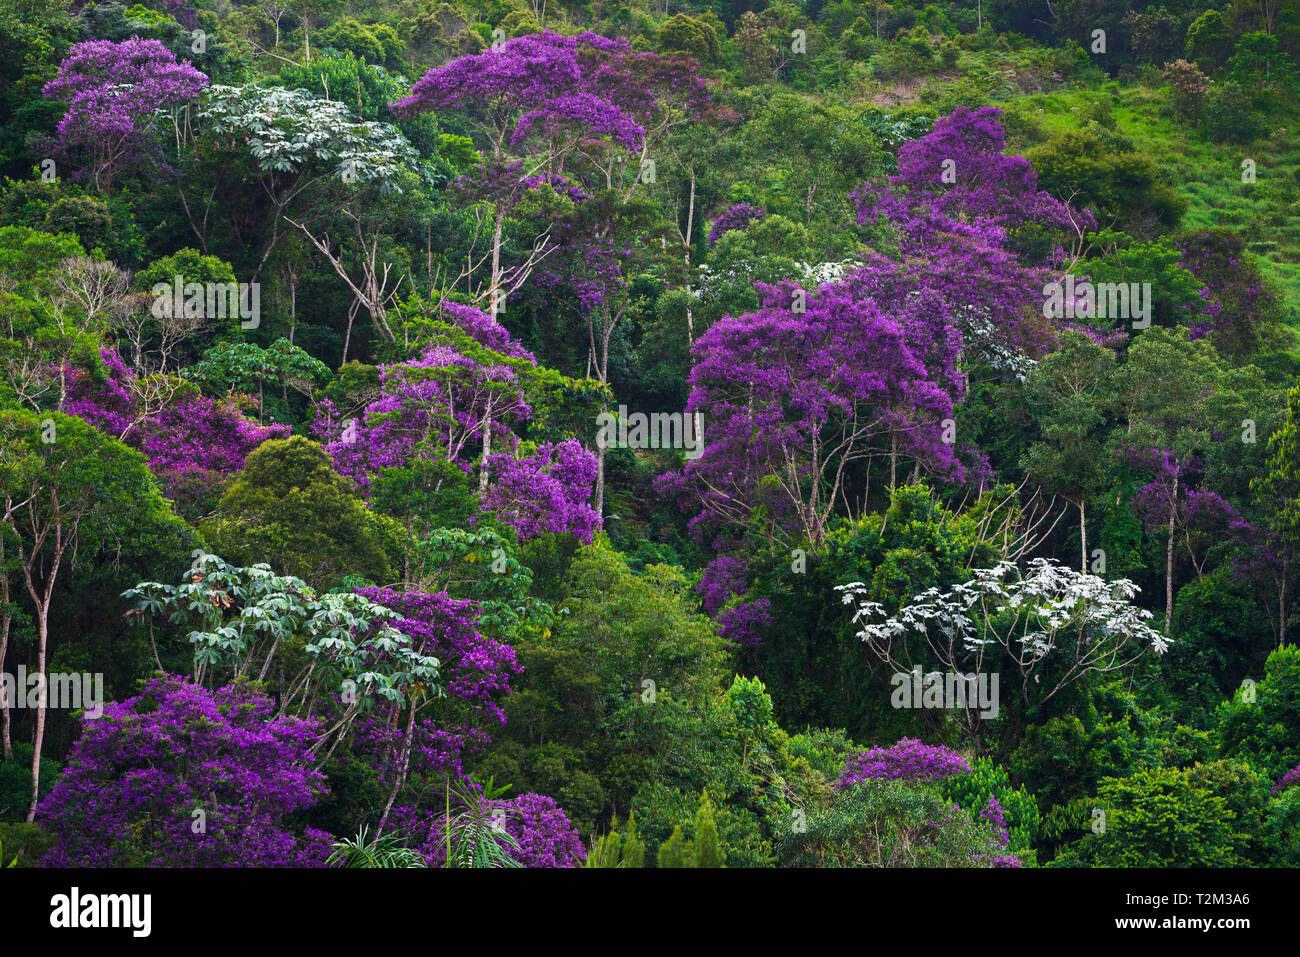 Tibouchina trees (Quaresmeiras) coloring the Southeastern Brazilian Atlantic Forest during the Lent. Marechal Floriano, Espirito Santo, Brazil. Stock Photo